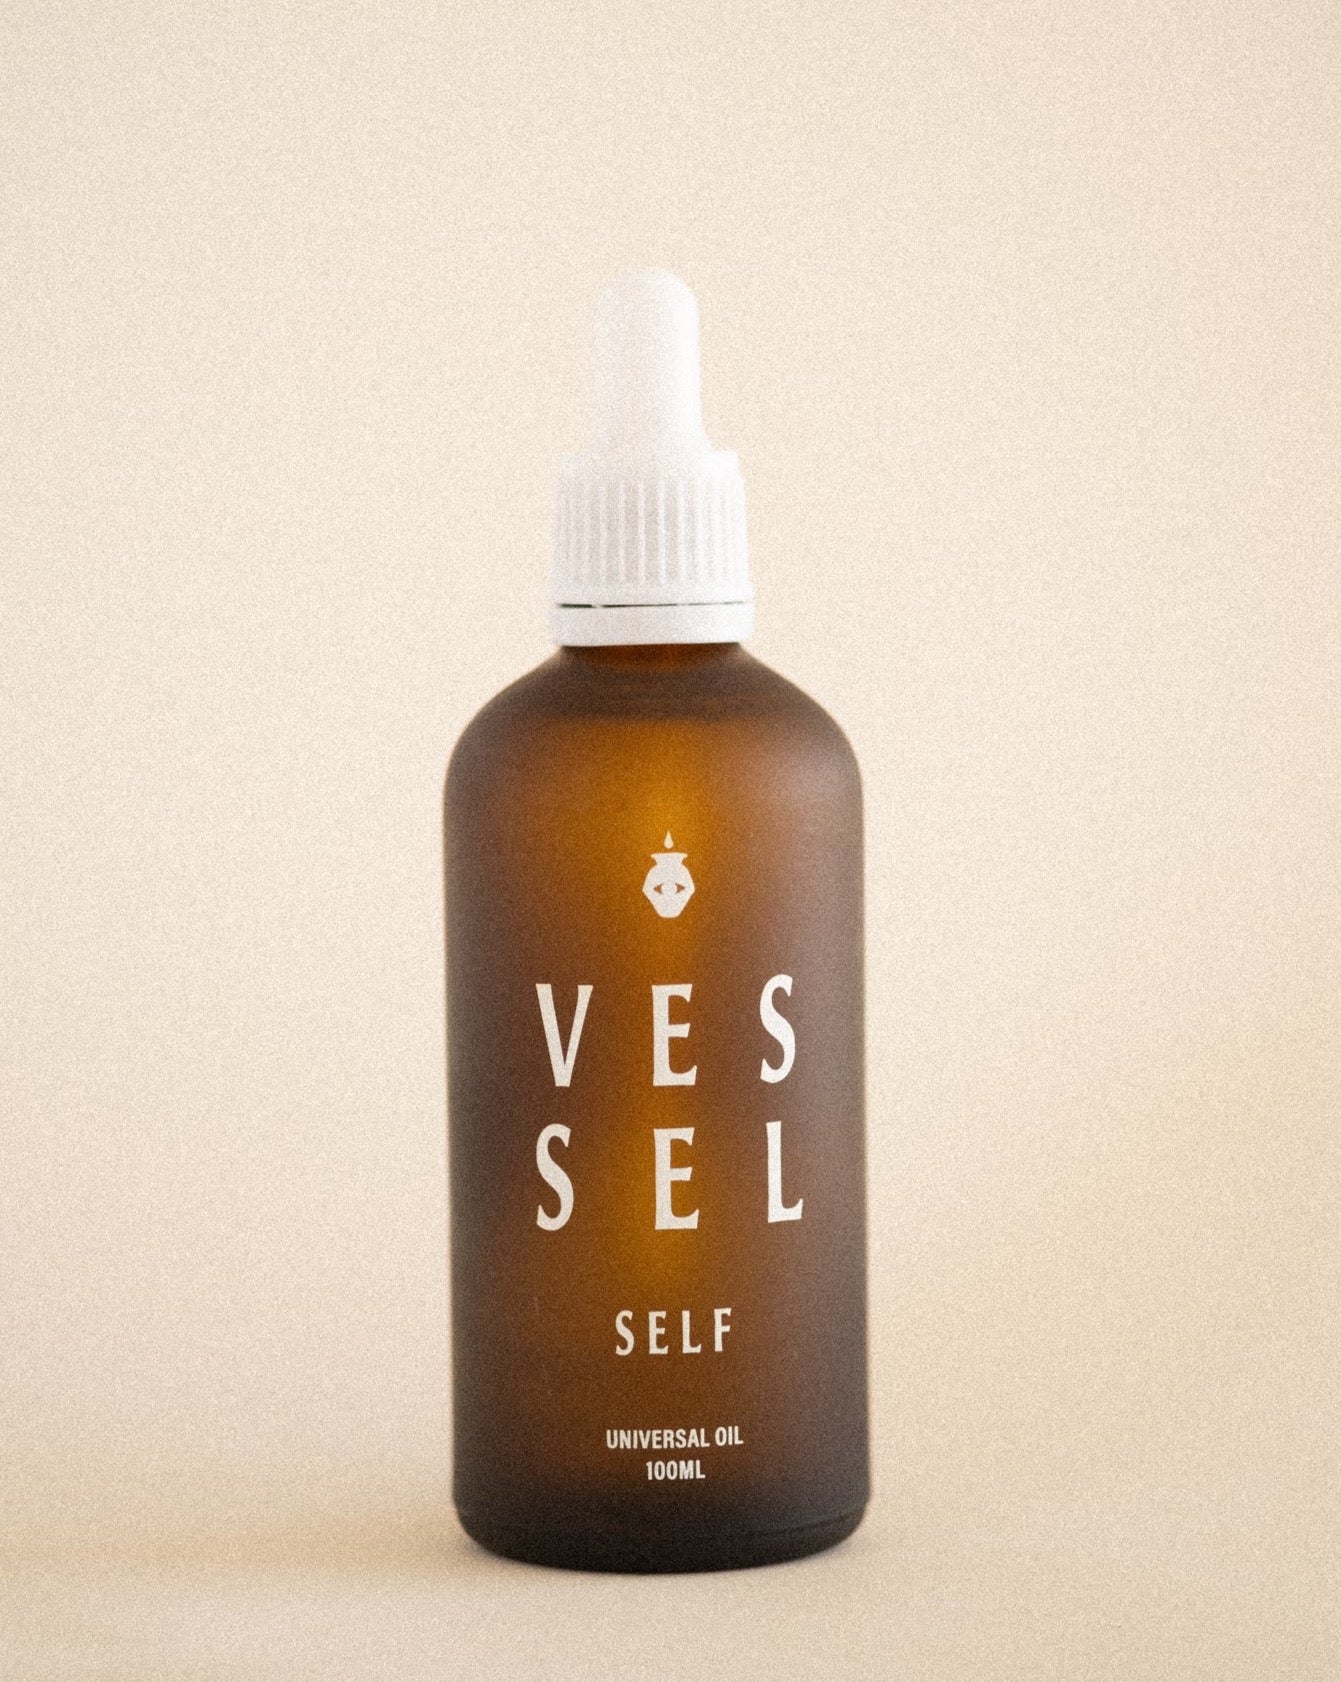 Self Universal Oil - Vessel Scent